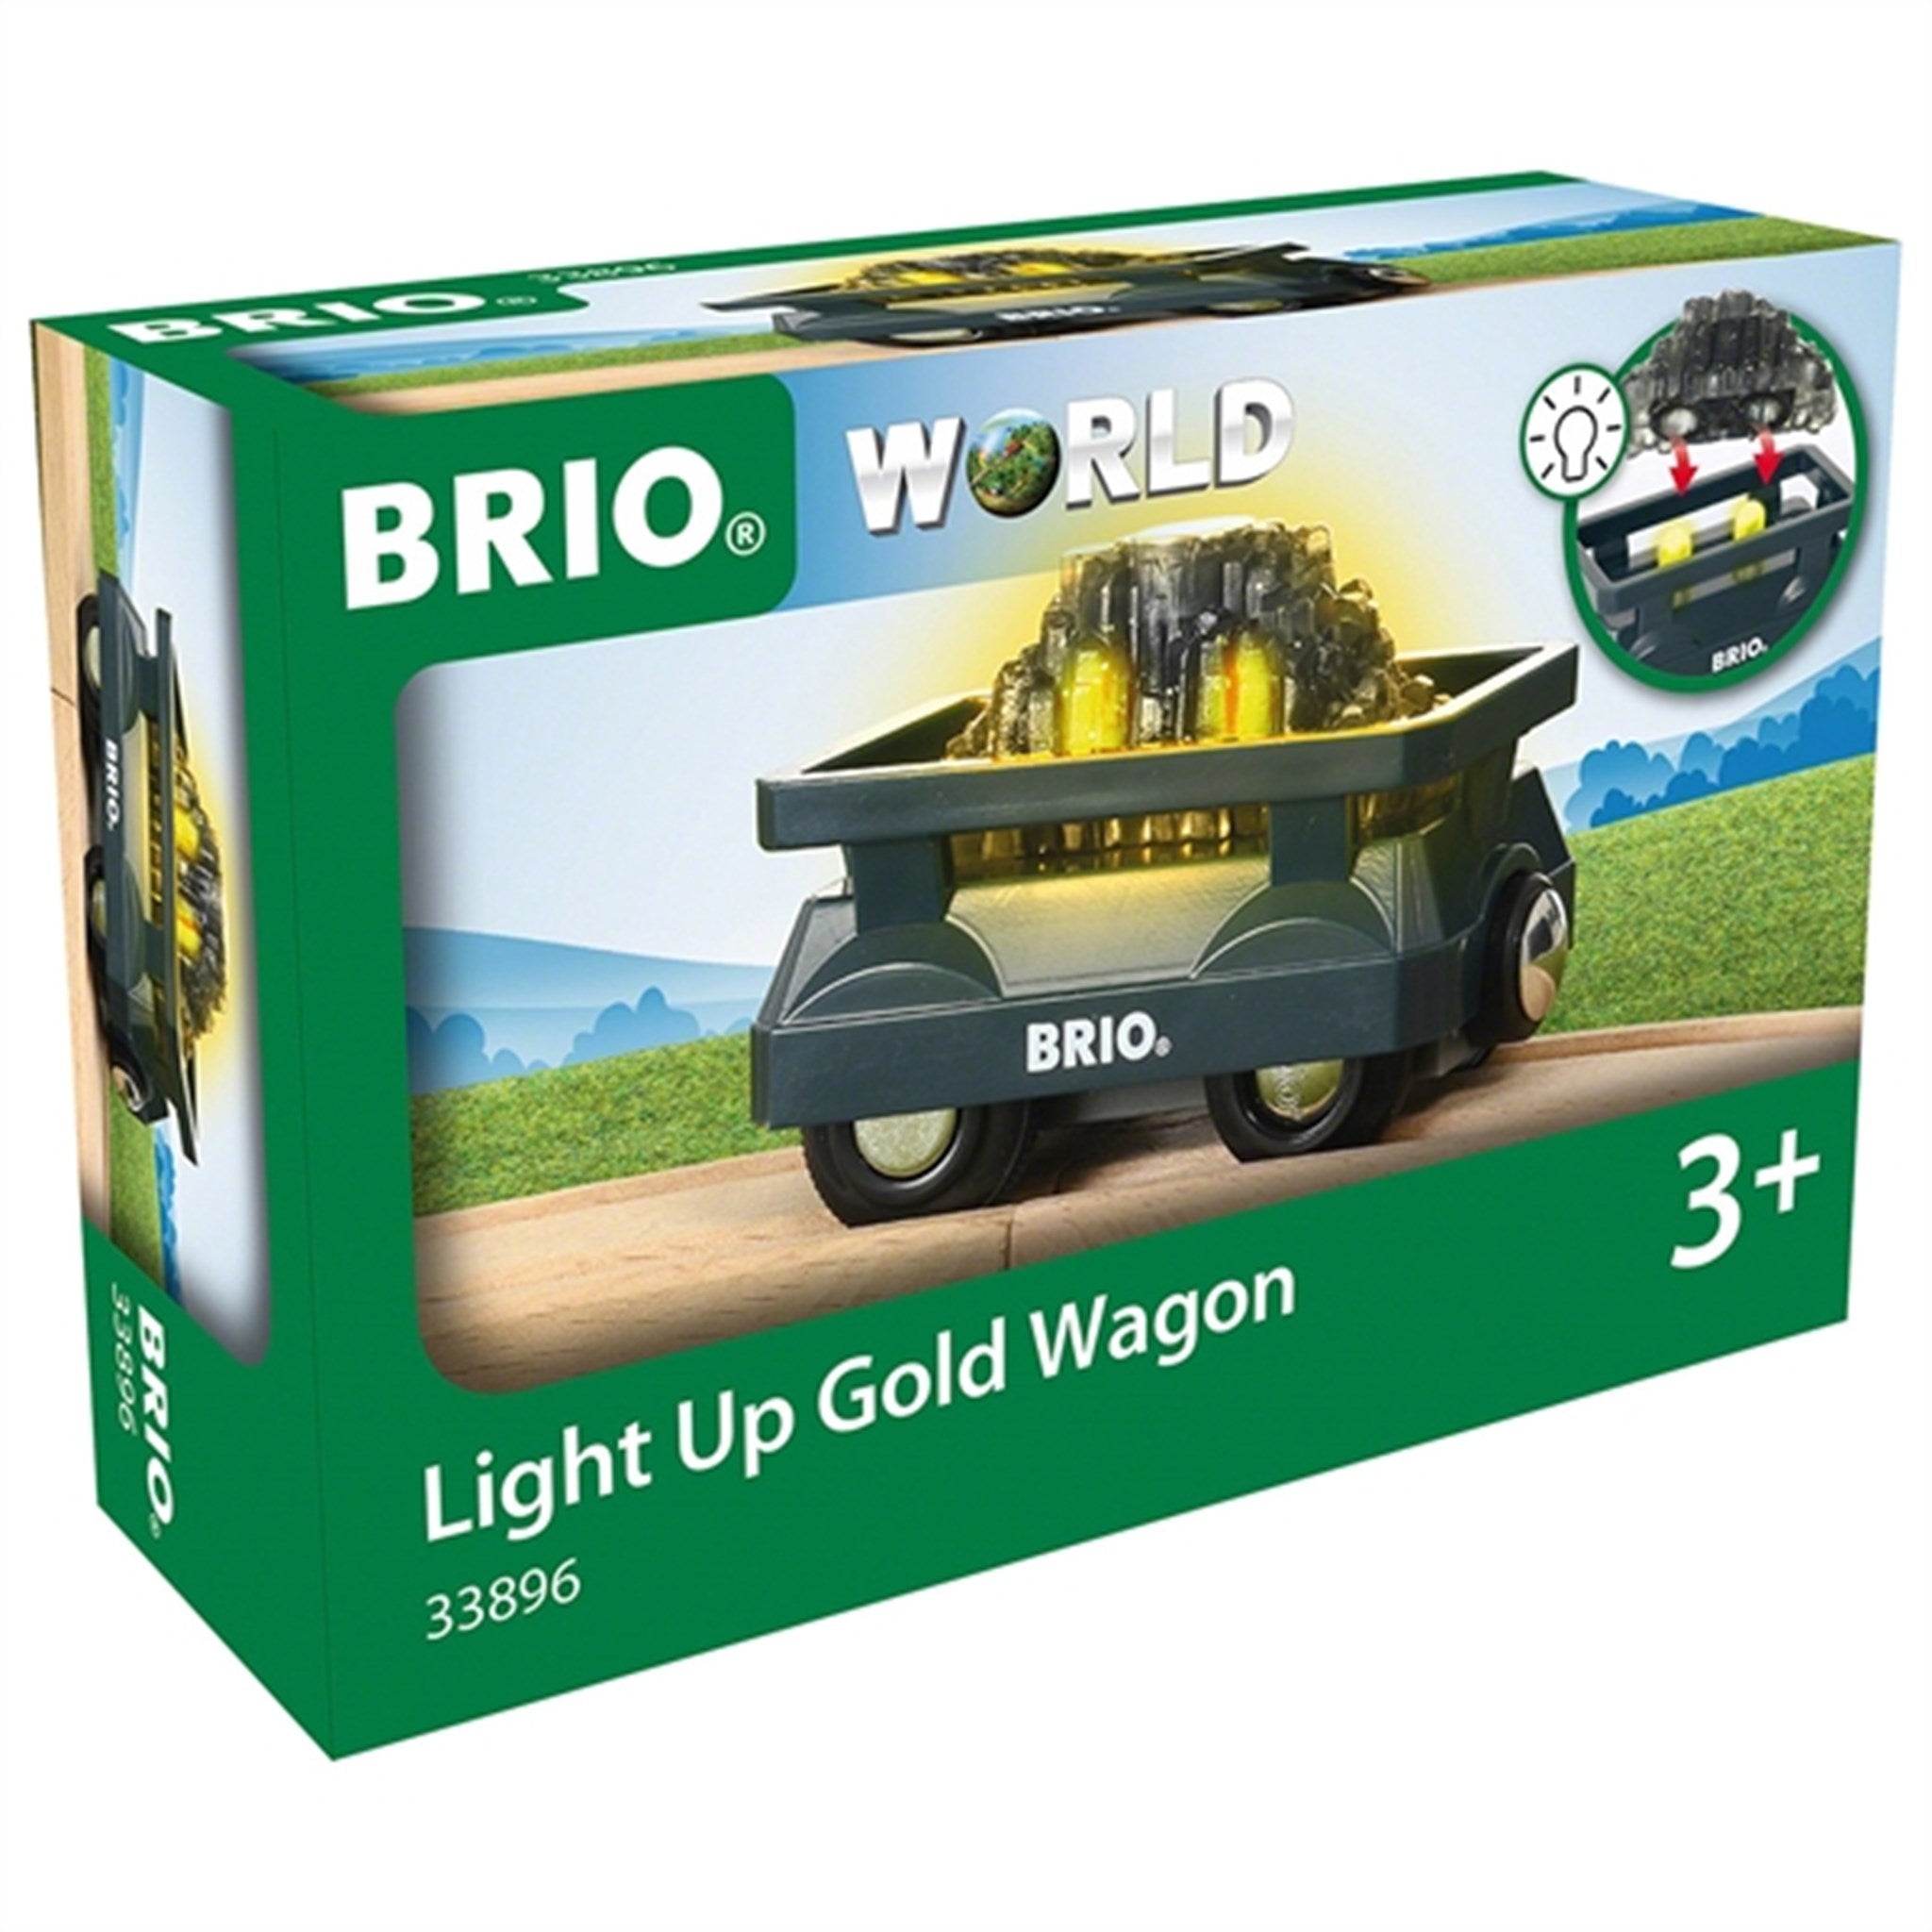 BRIO® Light Up Gold Wagon 2